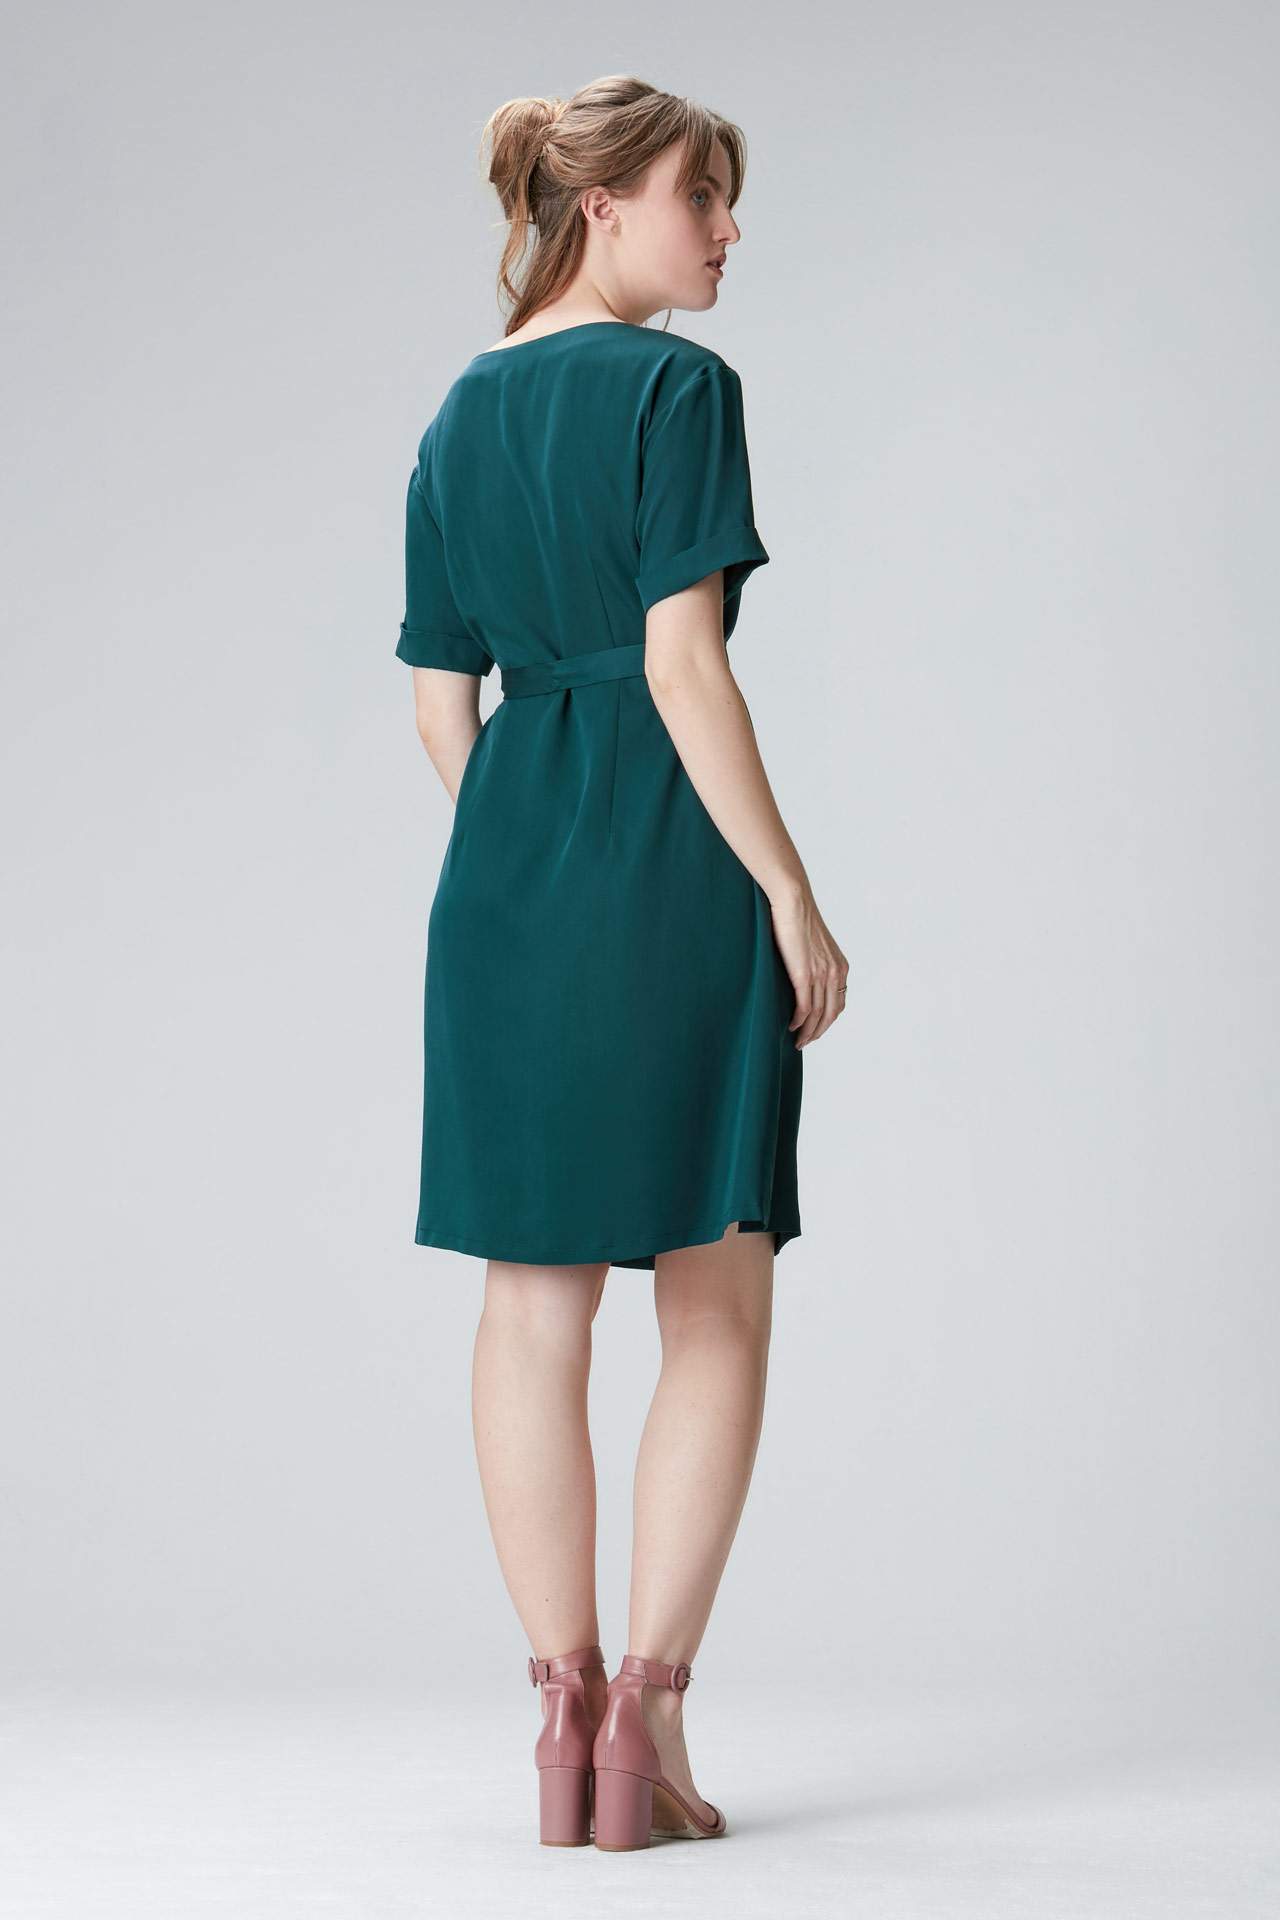 Knee-length summer dress with sleeves "Ed-daa" in green made of 100% Tencel 